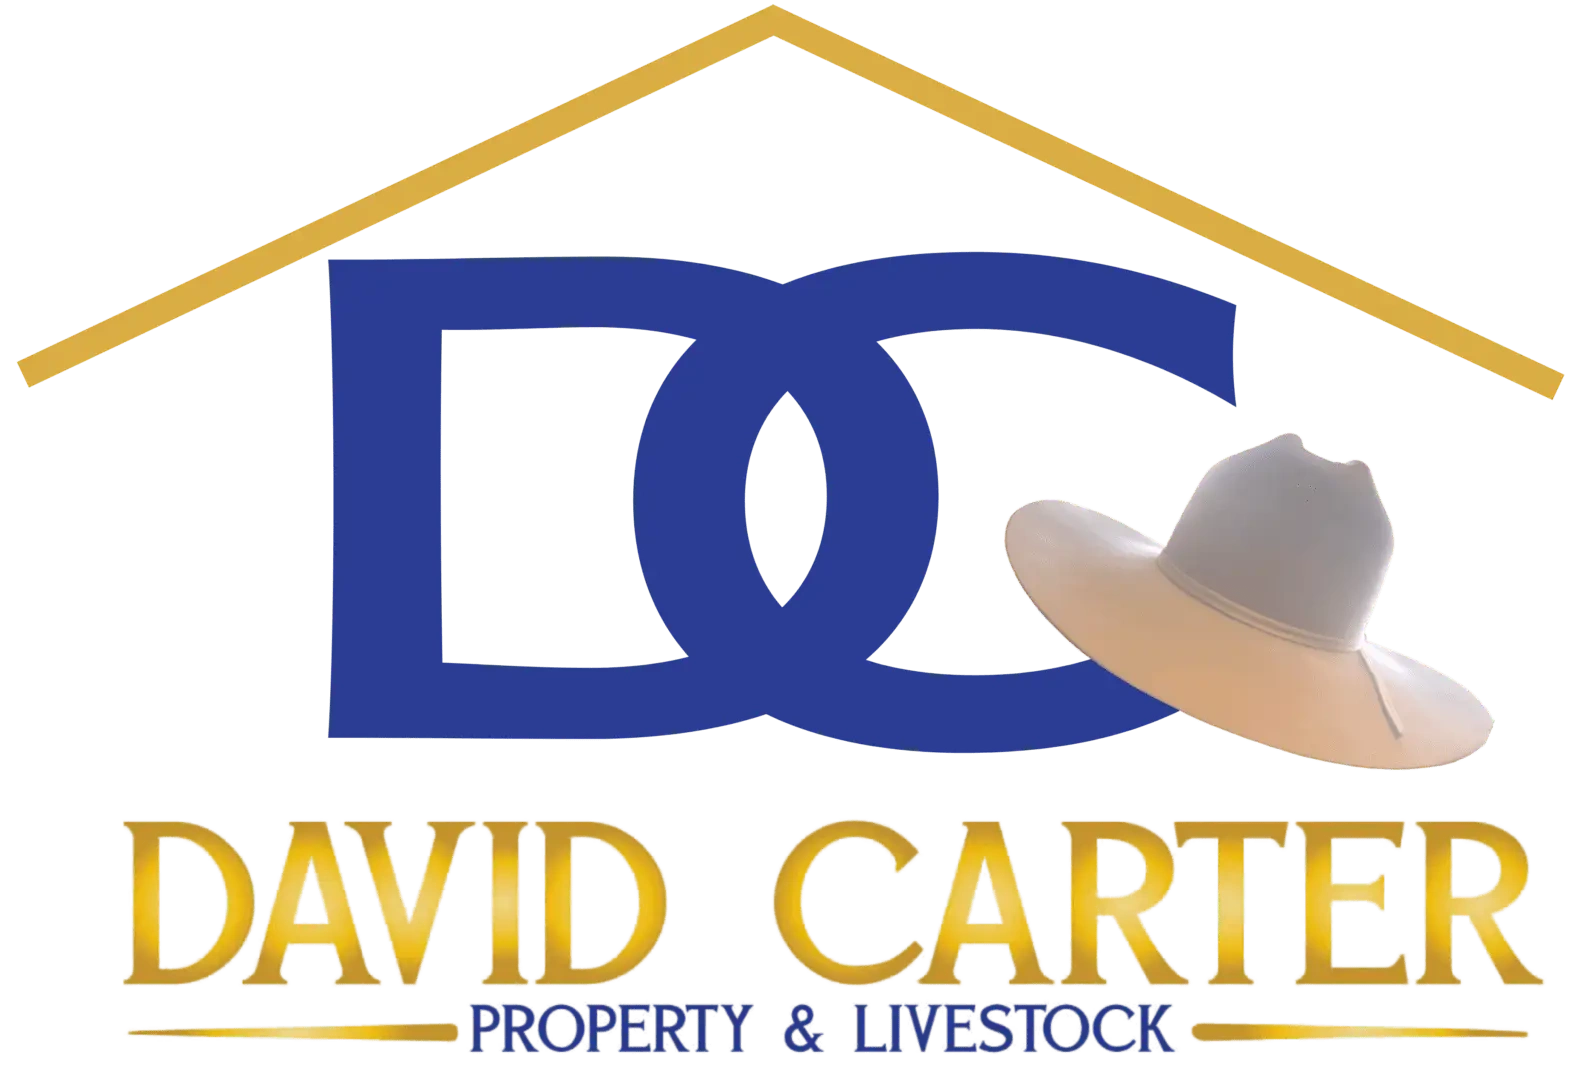 David Carter Property & Livestock - Real Estate Agency